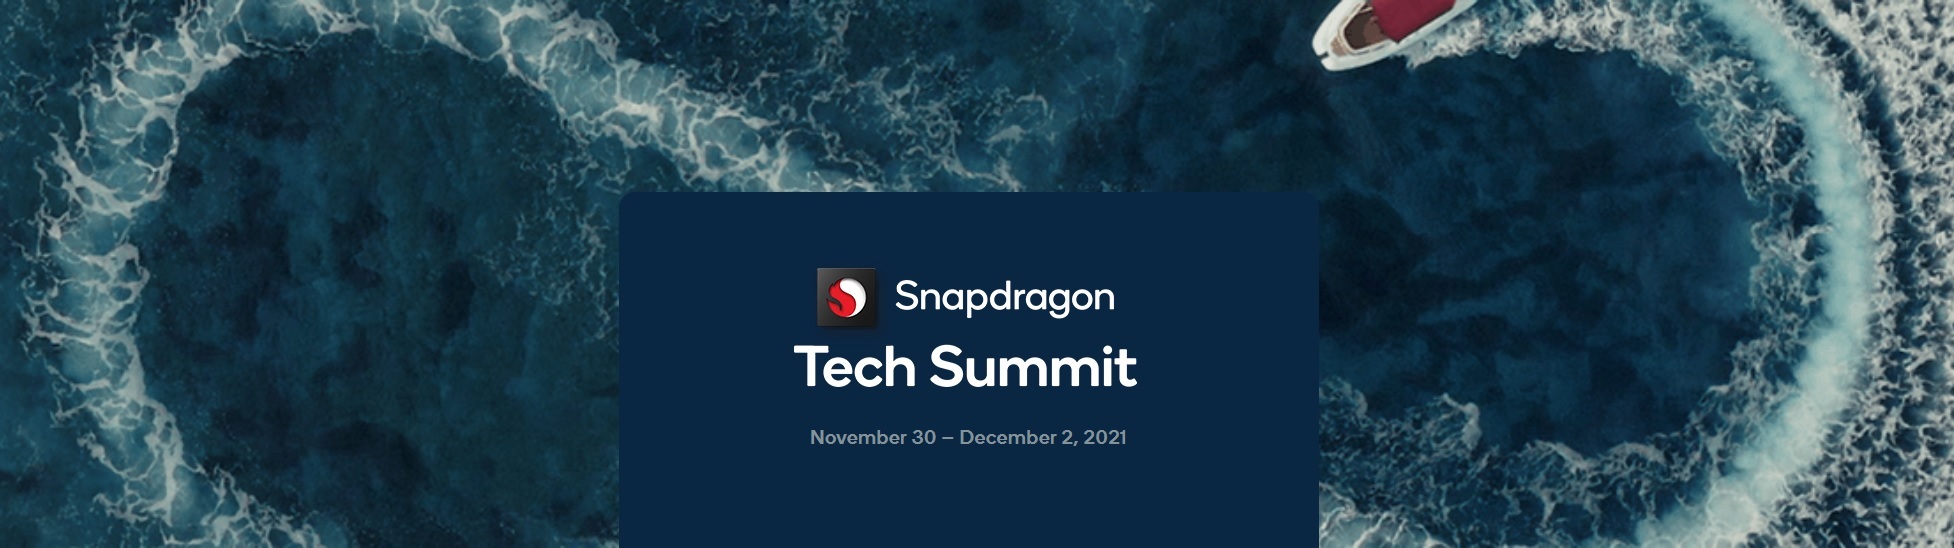 Qualcomm Snapdragon Tech Summit 2021 Qualcomm Snapdragon 898 teaser